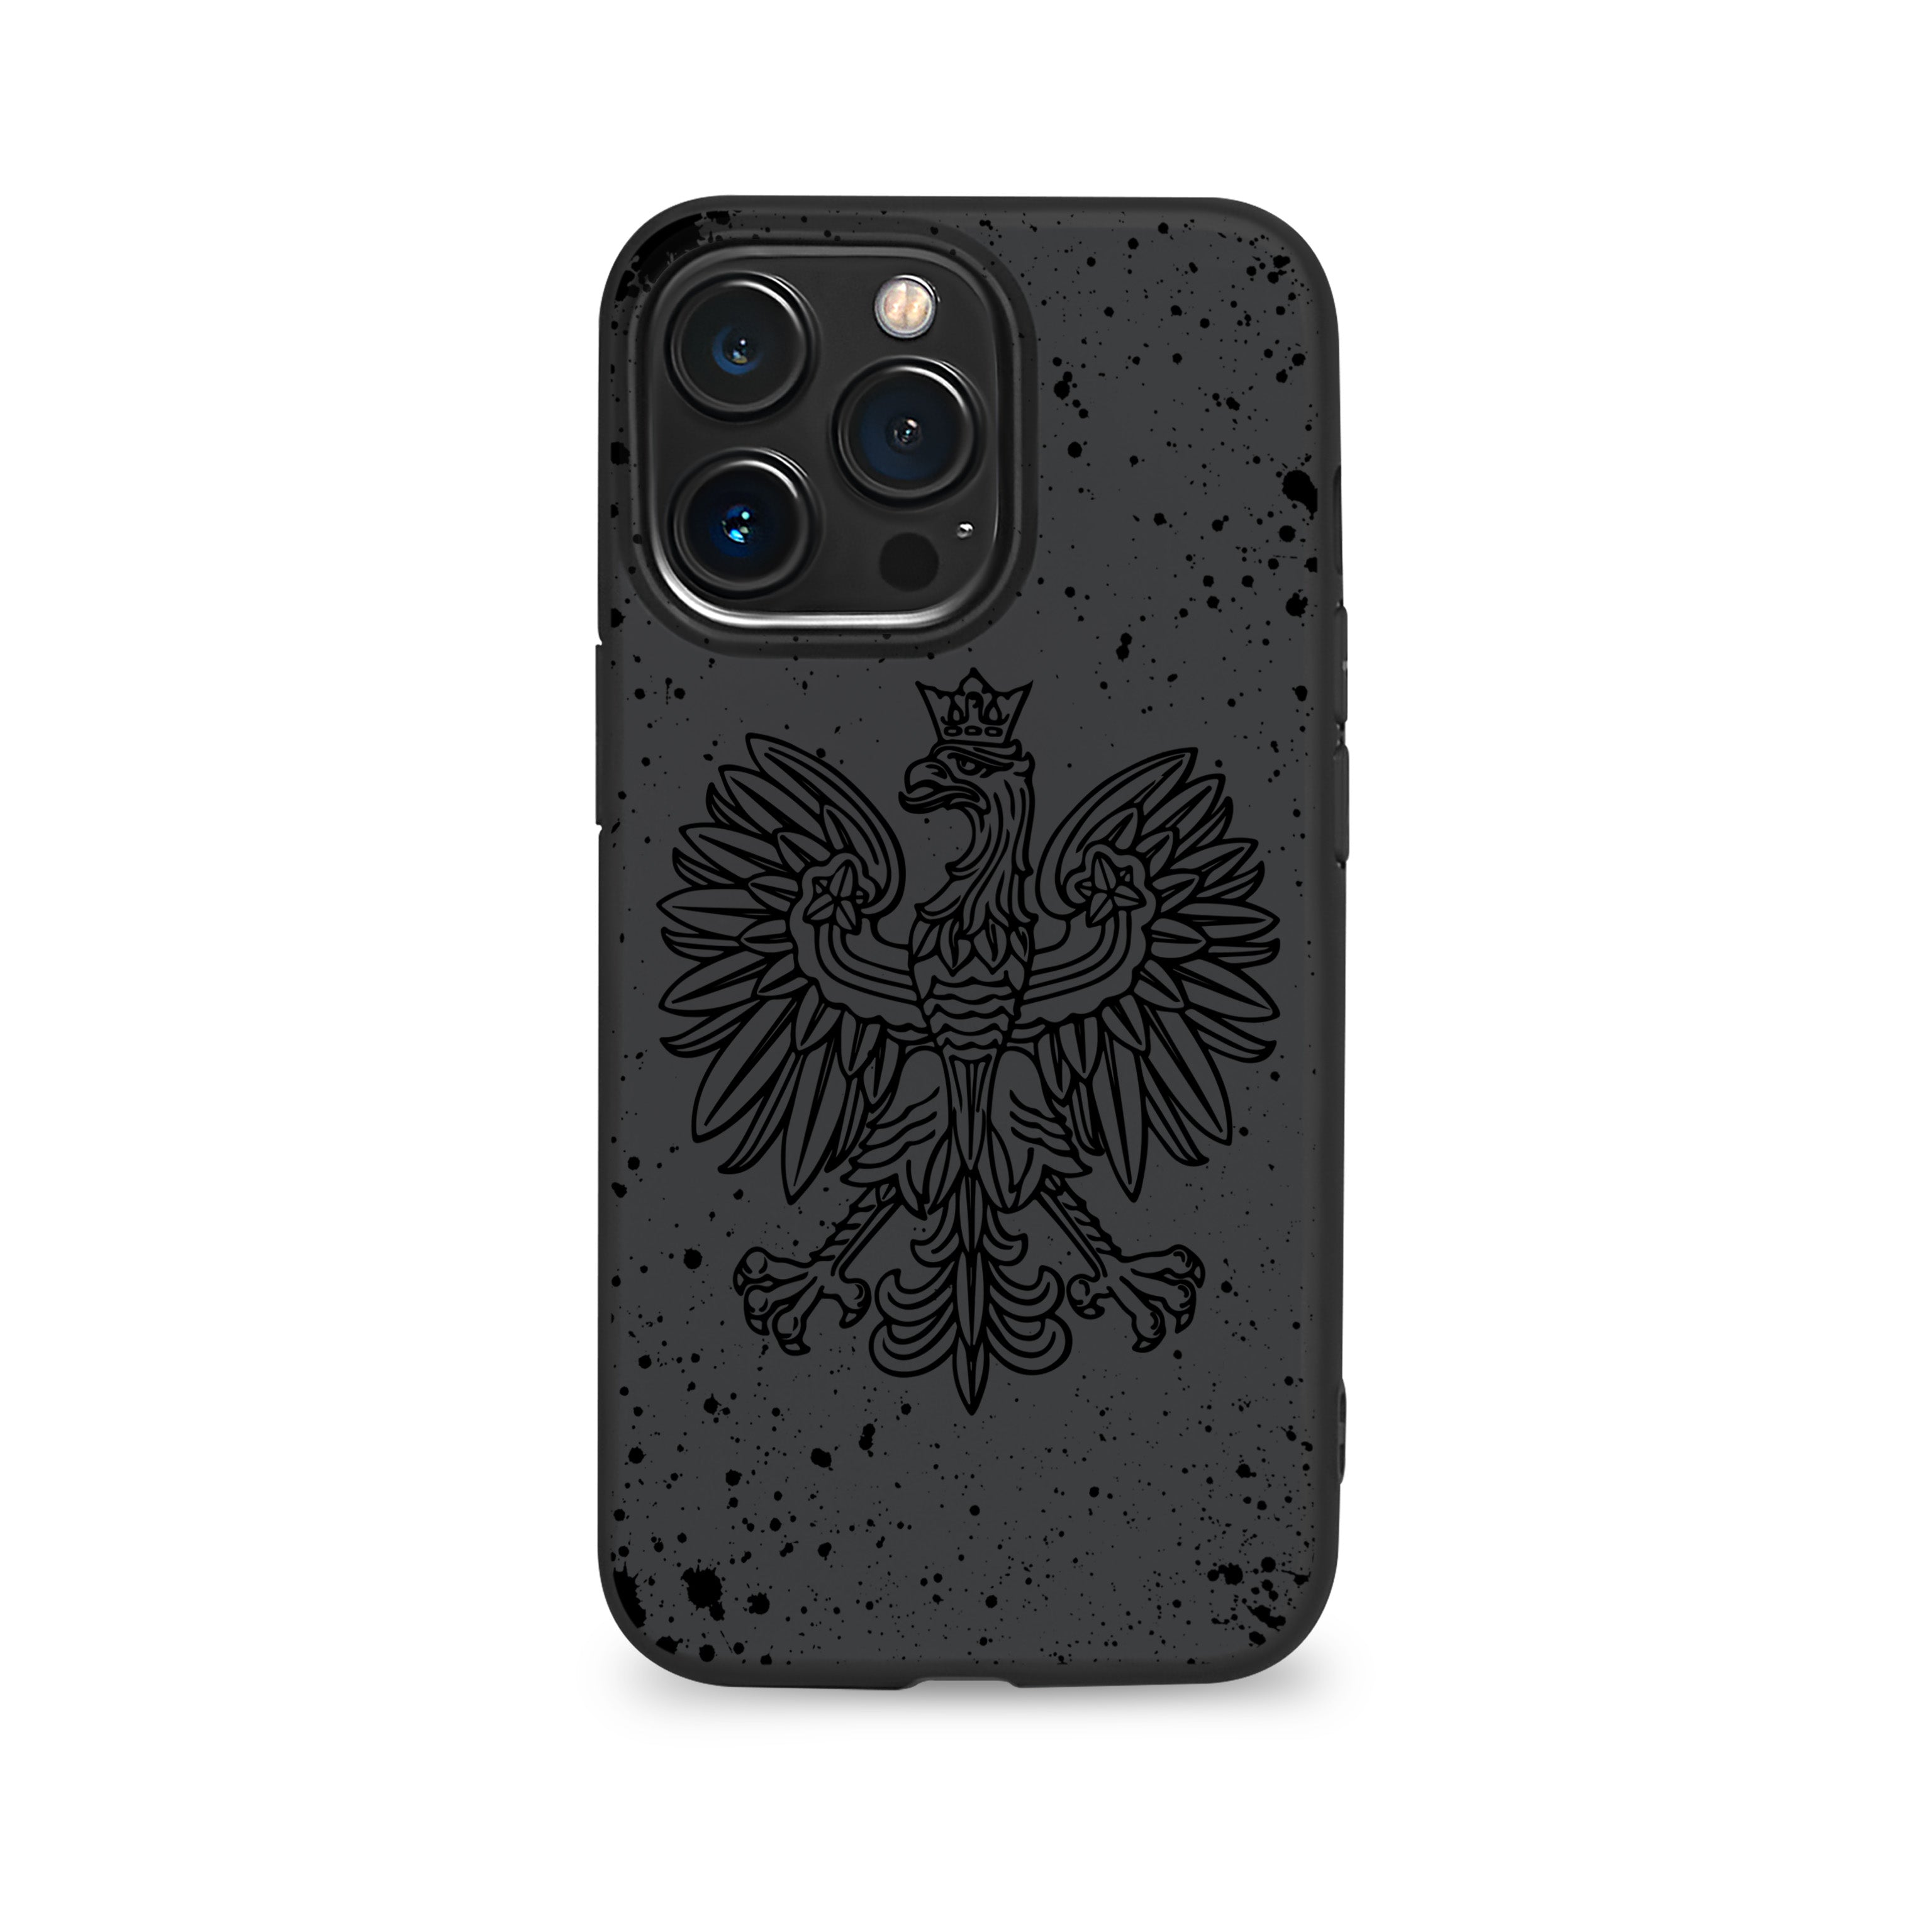 Polish Emblem phone case for iPhone